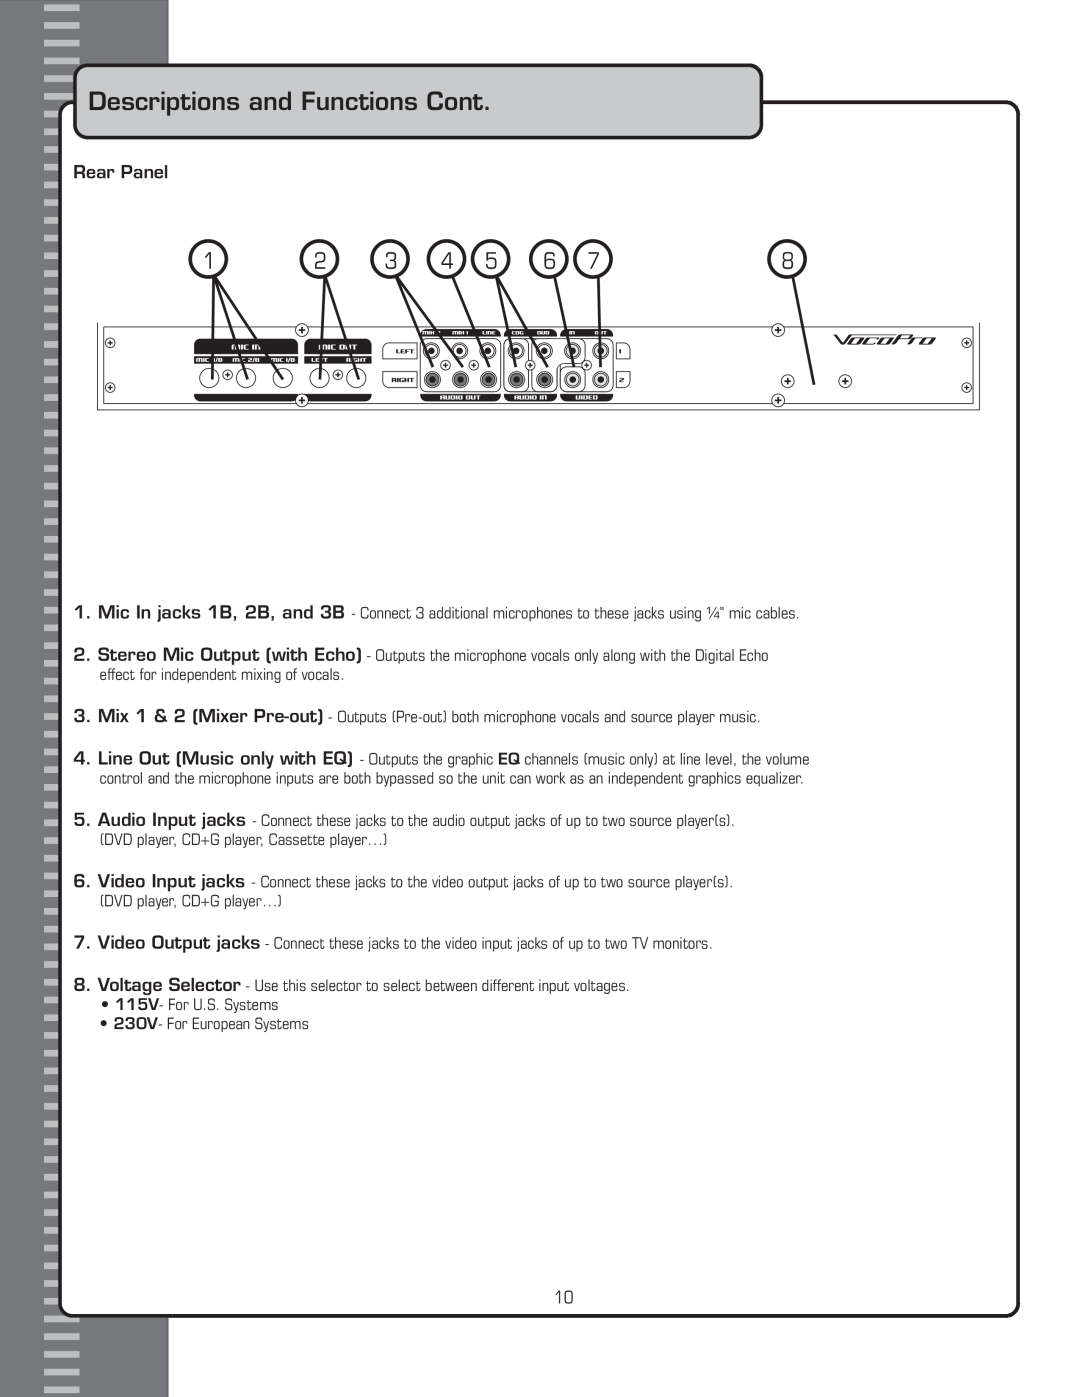 VocoPro DA-1055 PRO owner manual Descriptions and Functions Cont, Rear Panel 